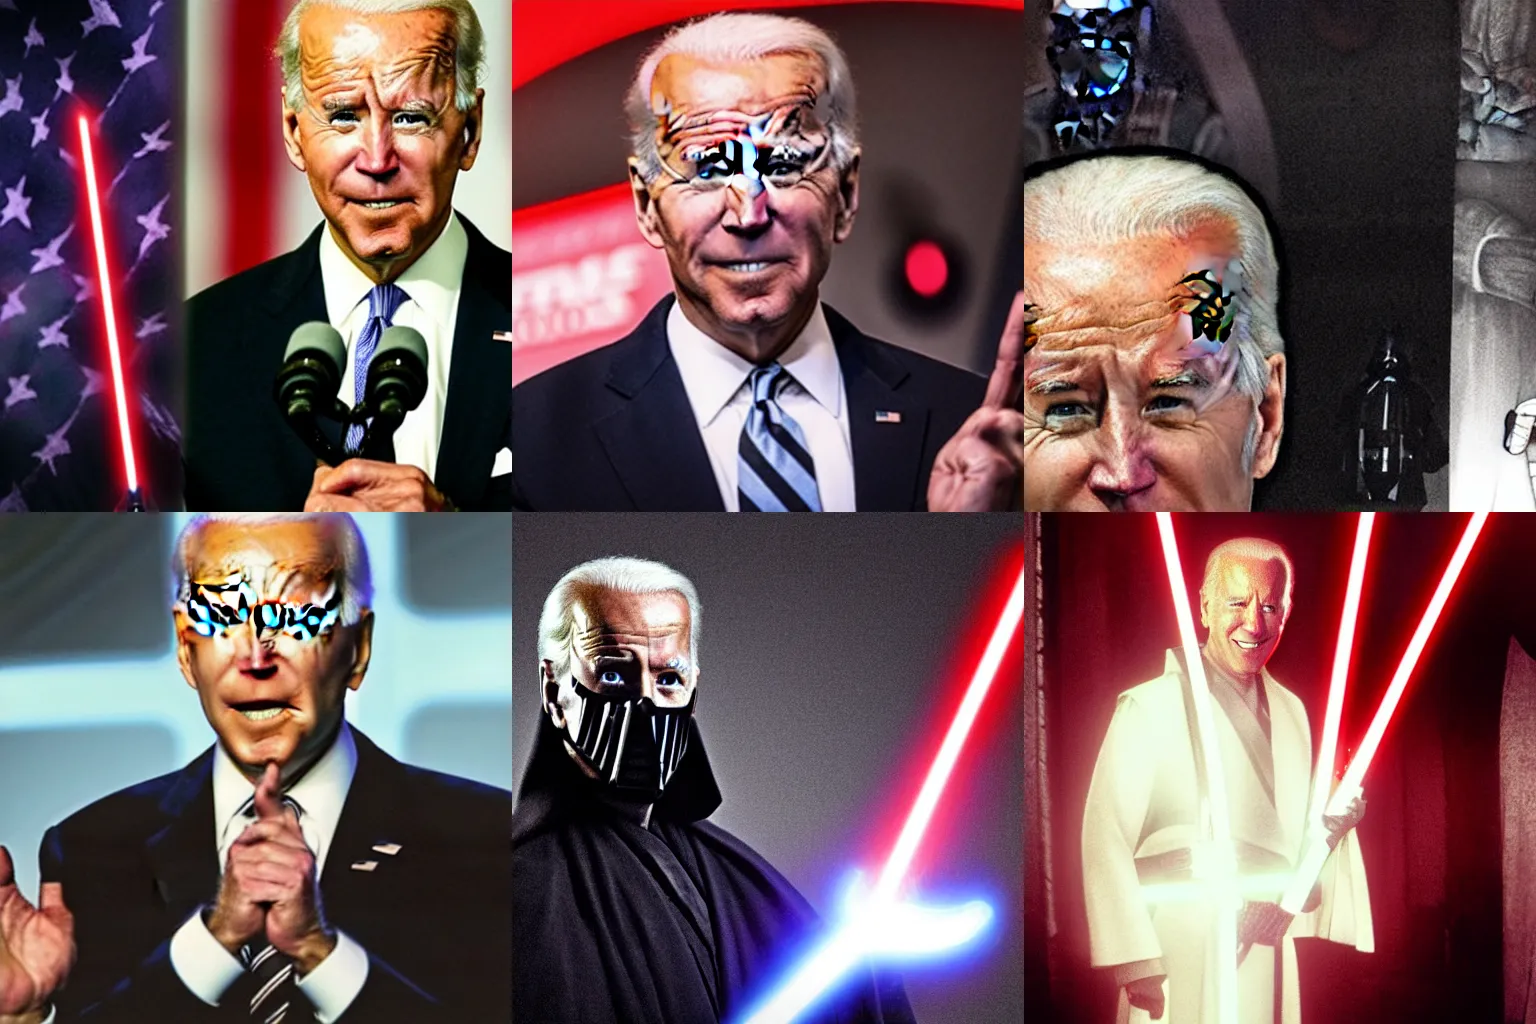 Prompt: Joe Biden as the Sith Emperor in Star Wars, dark photo